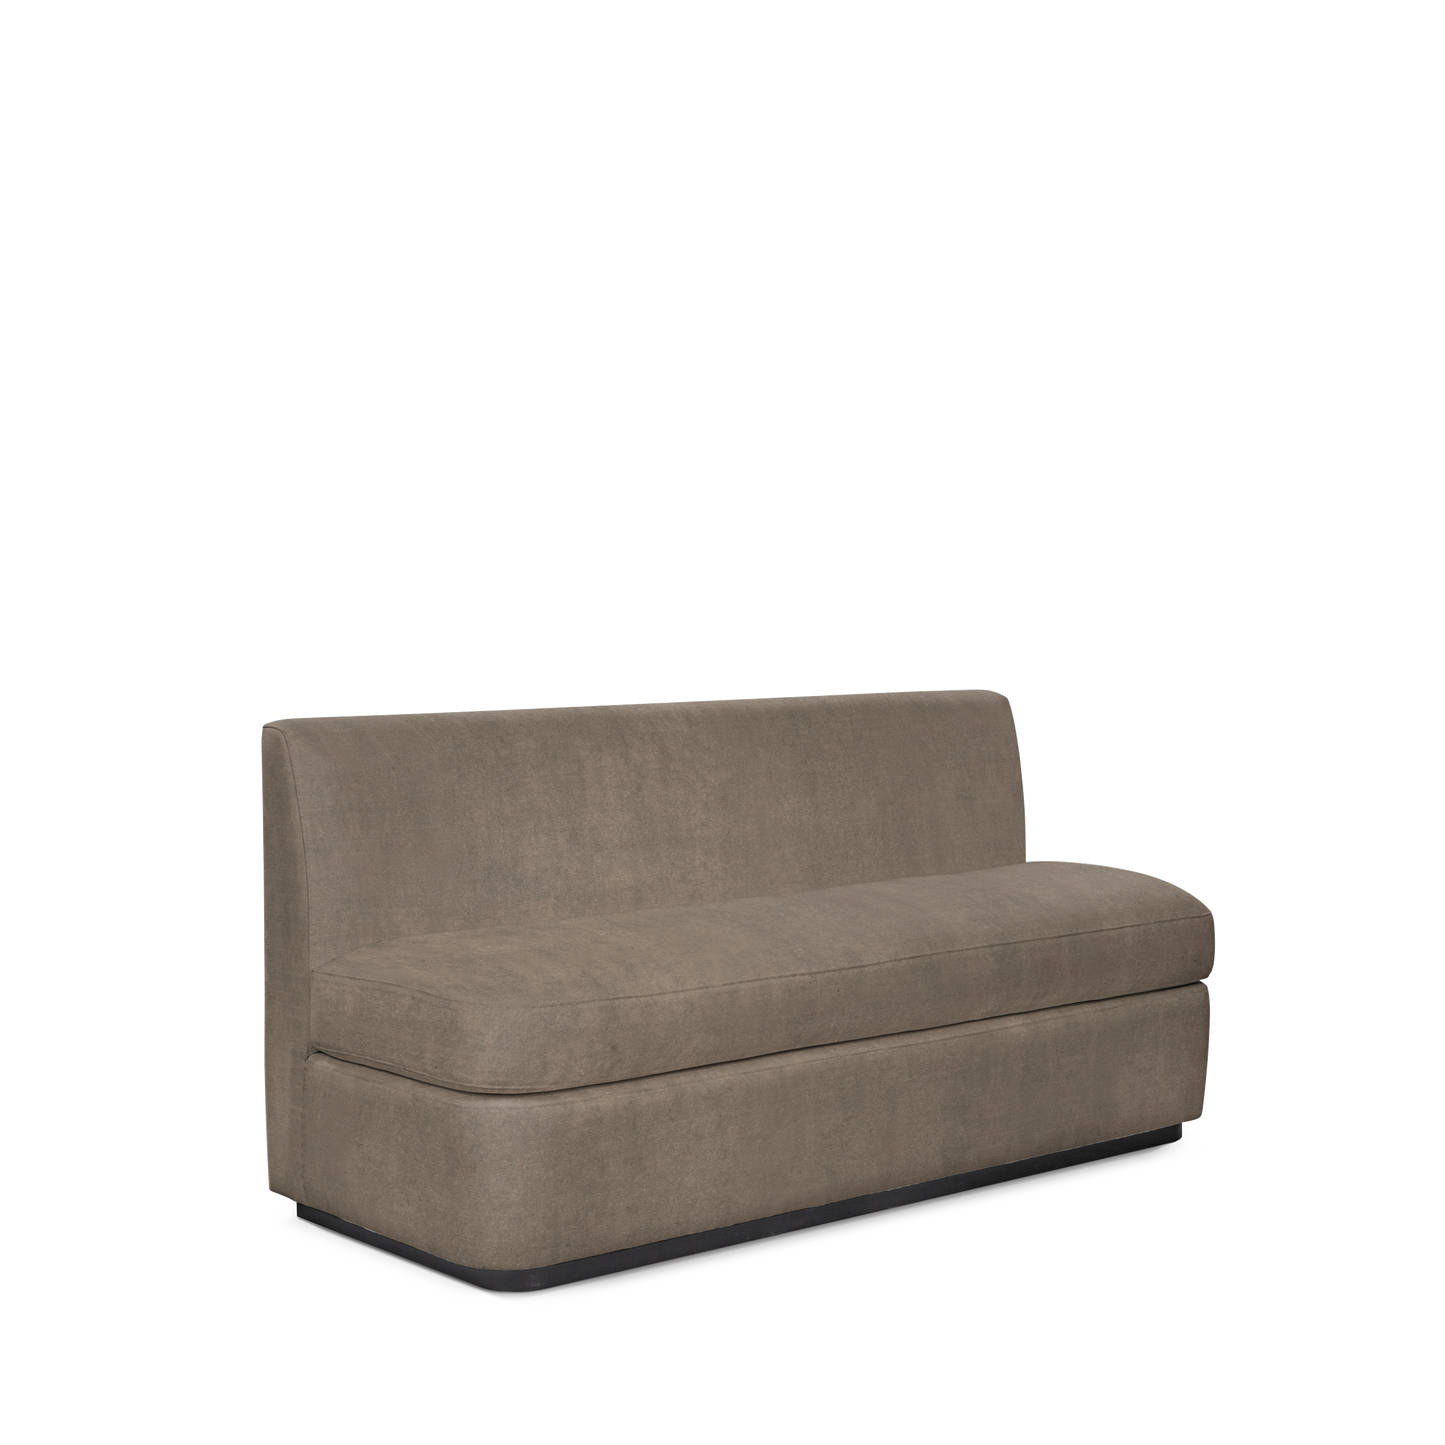  CALMA KITCHEN 3-seater sofa with suede grey  textile